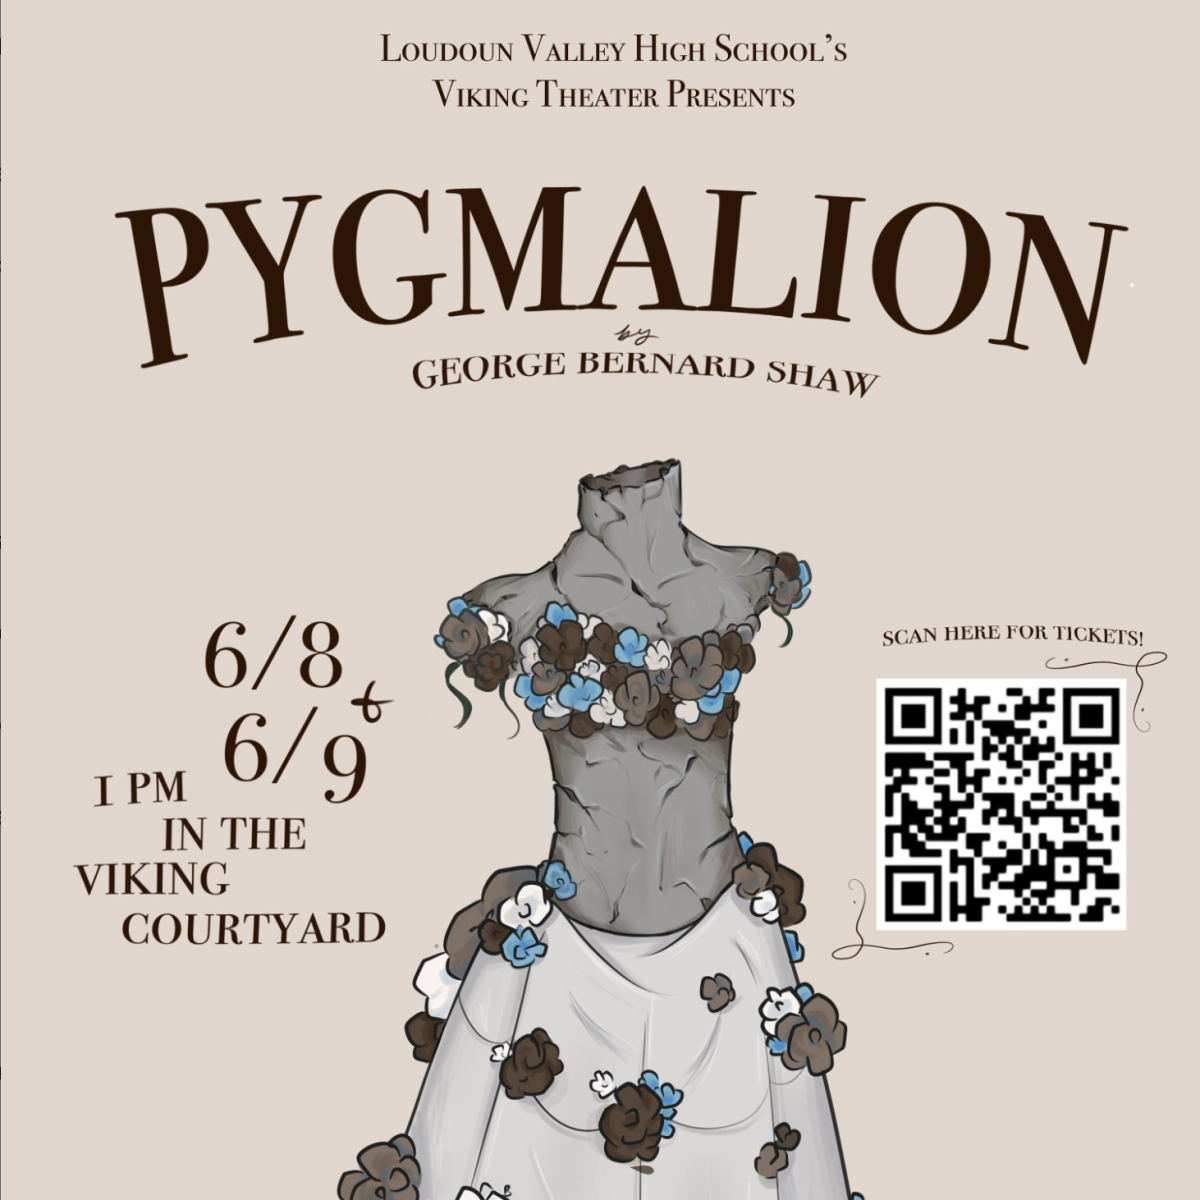 Pygmalion promotion poster from @vikingtheatrelv